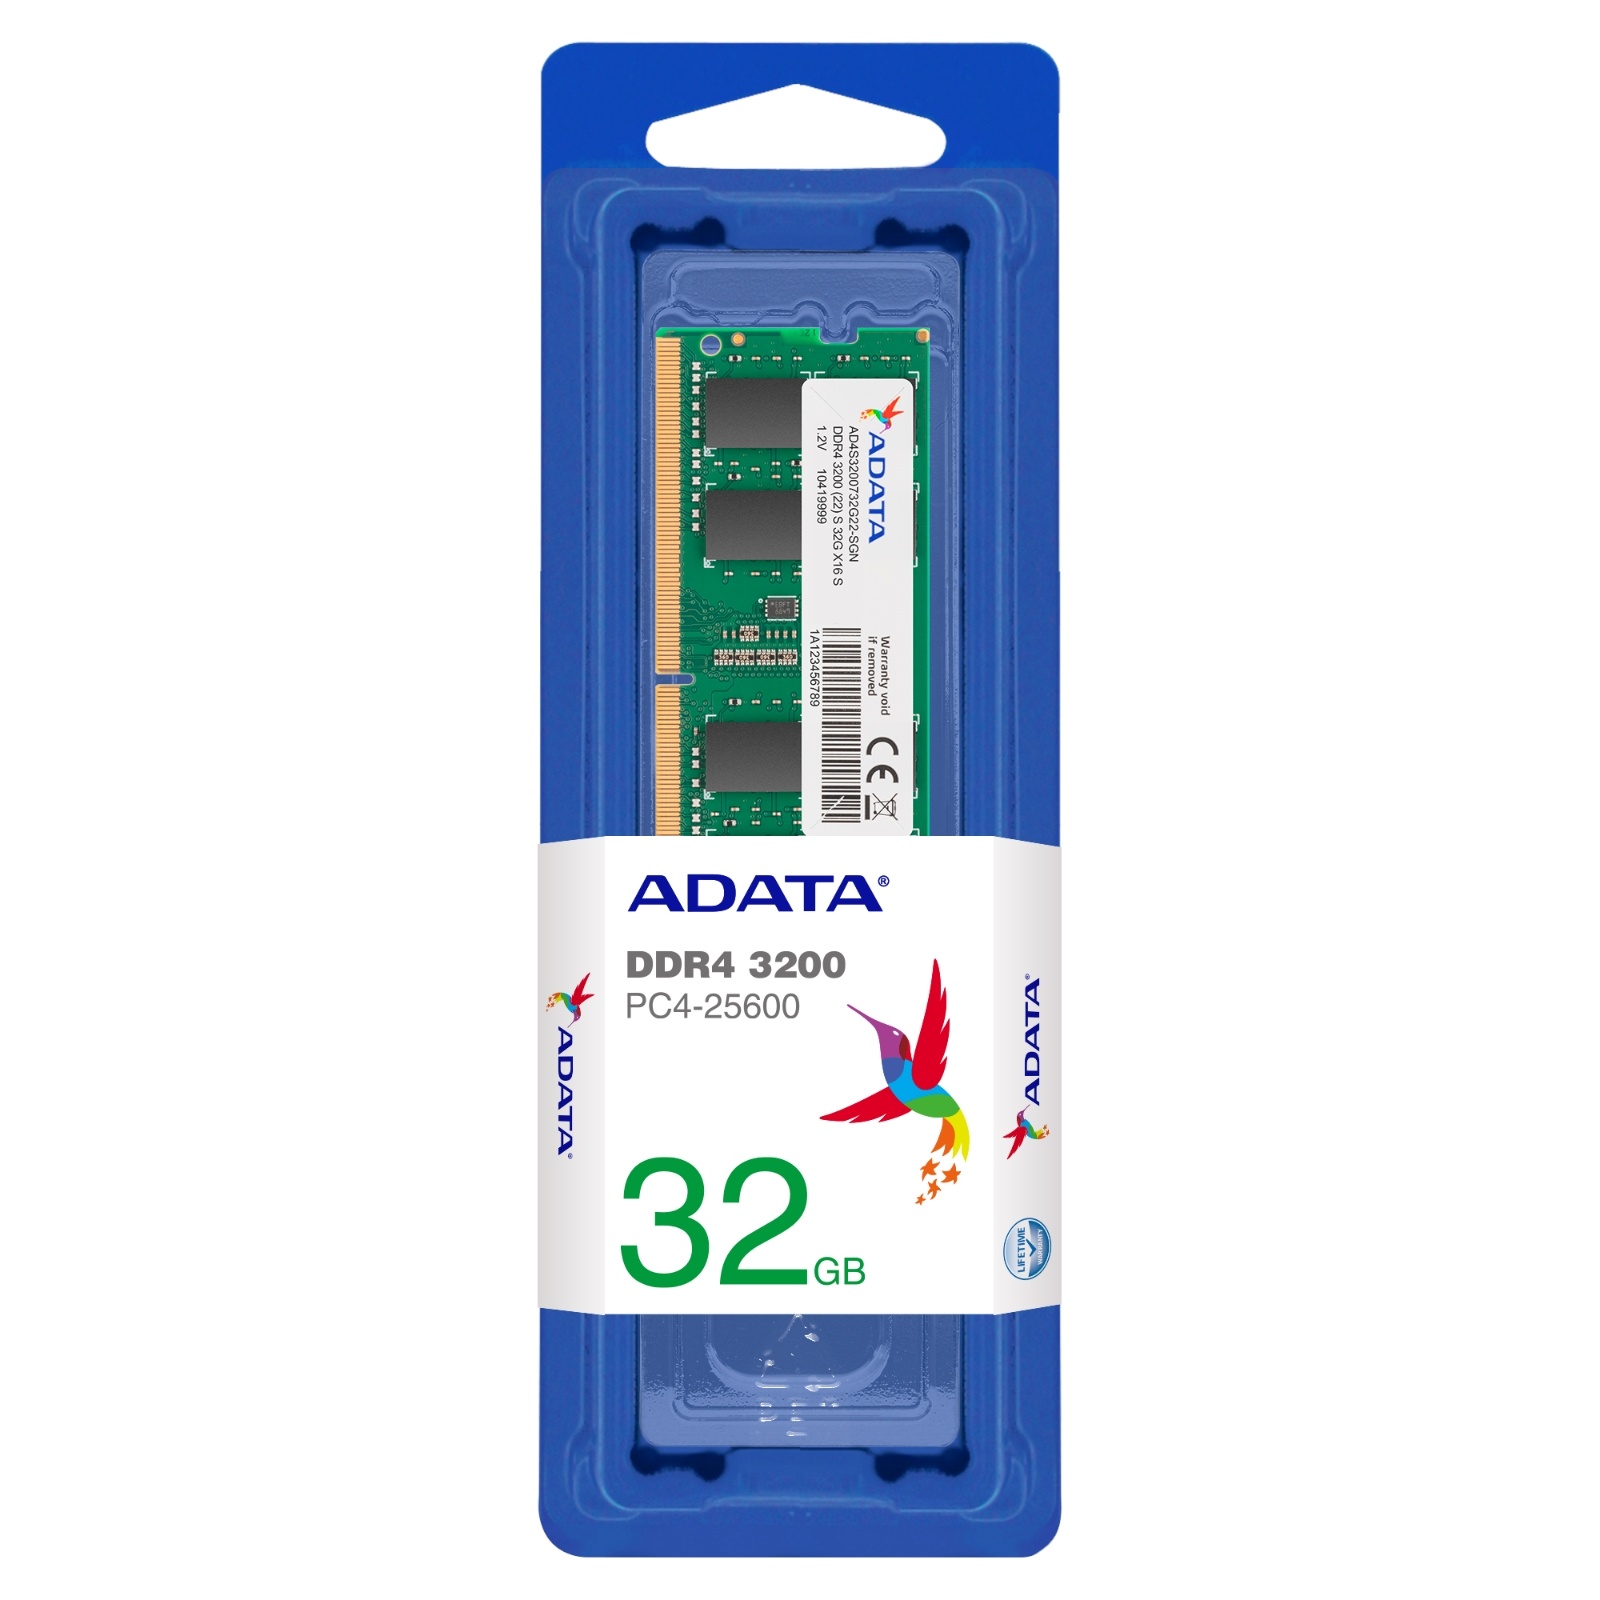 ADATA DDR4-3200 2048x8 SODIMM Laptop RAM (32GB)